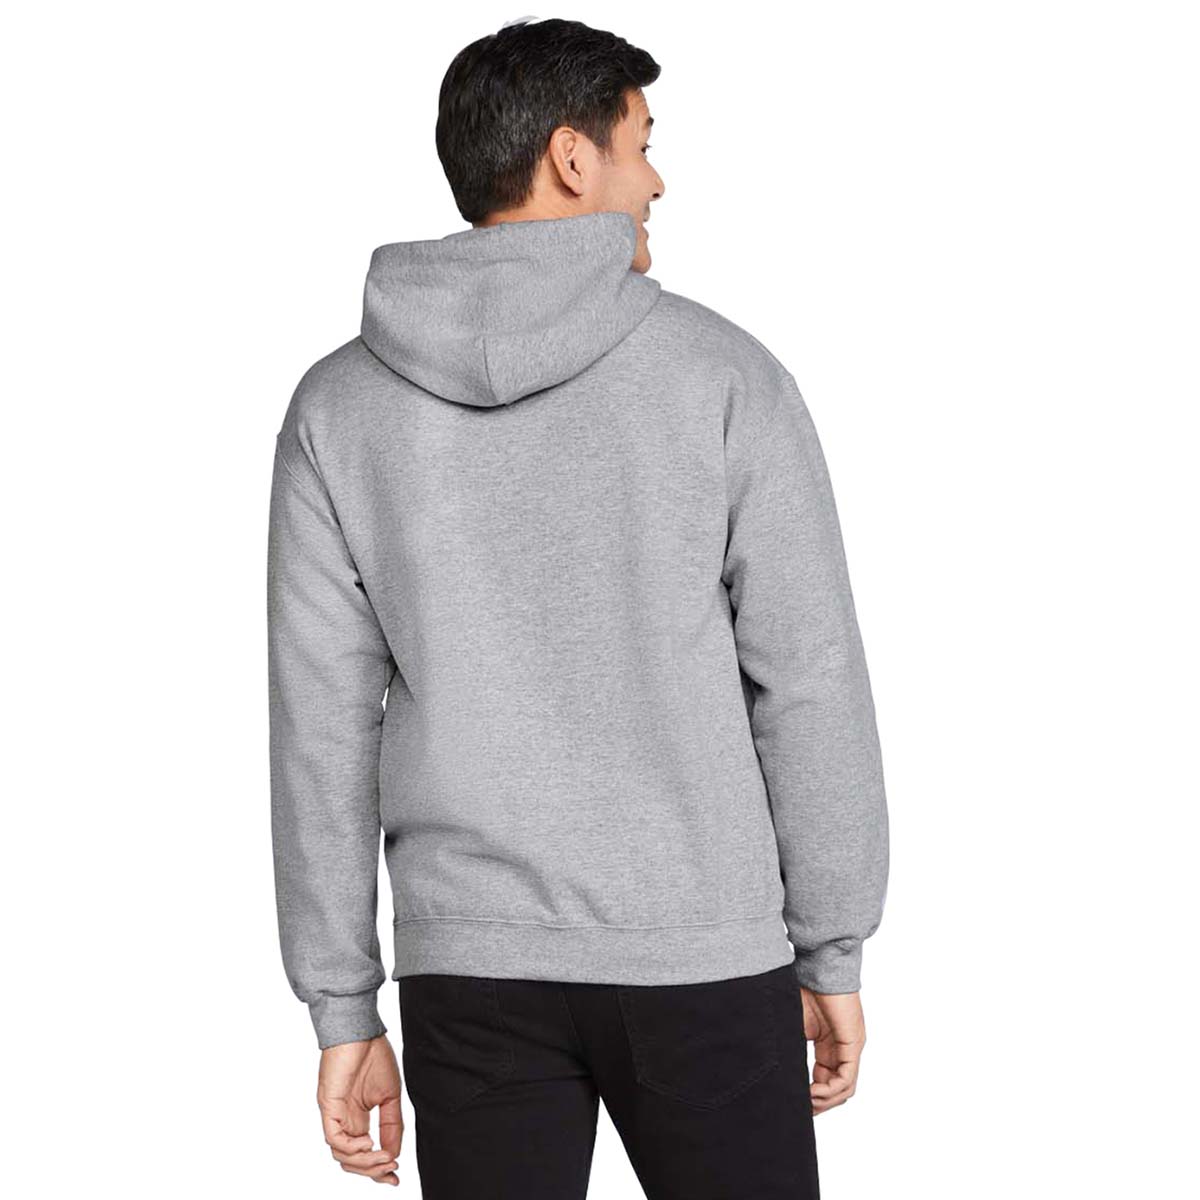 Gildan sf500 hoodie in colour Sport Grey - back view